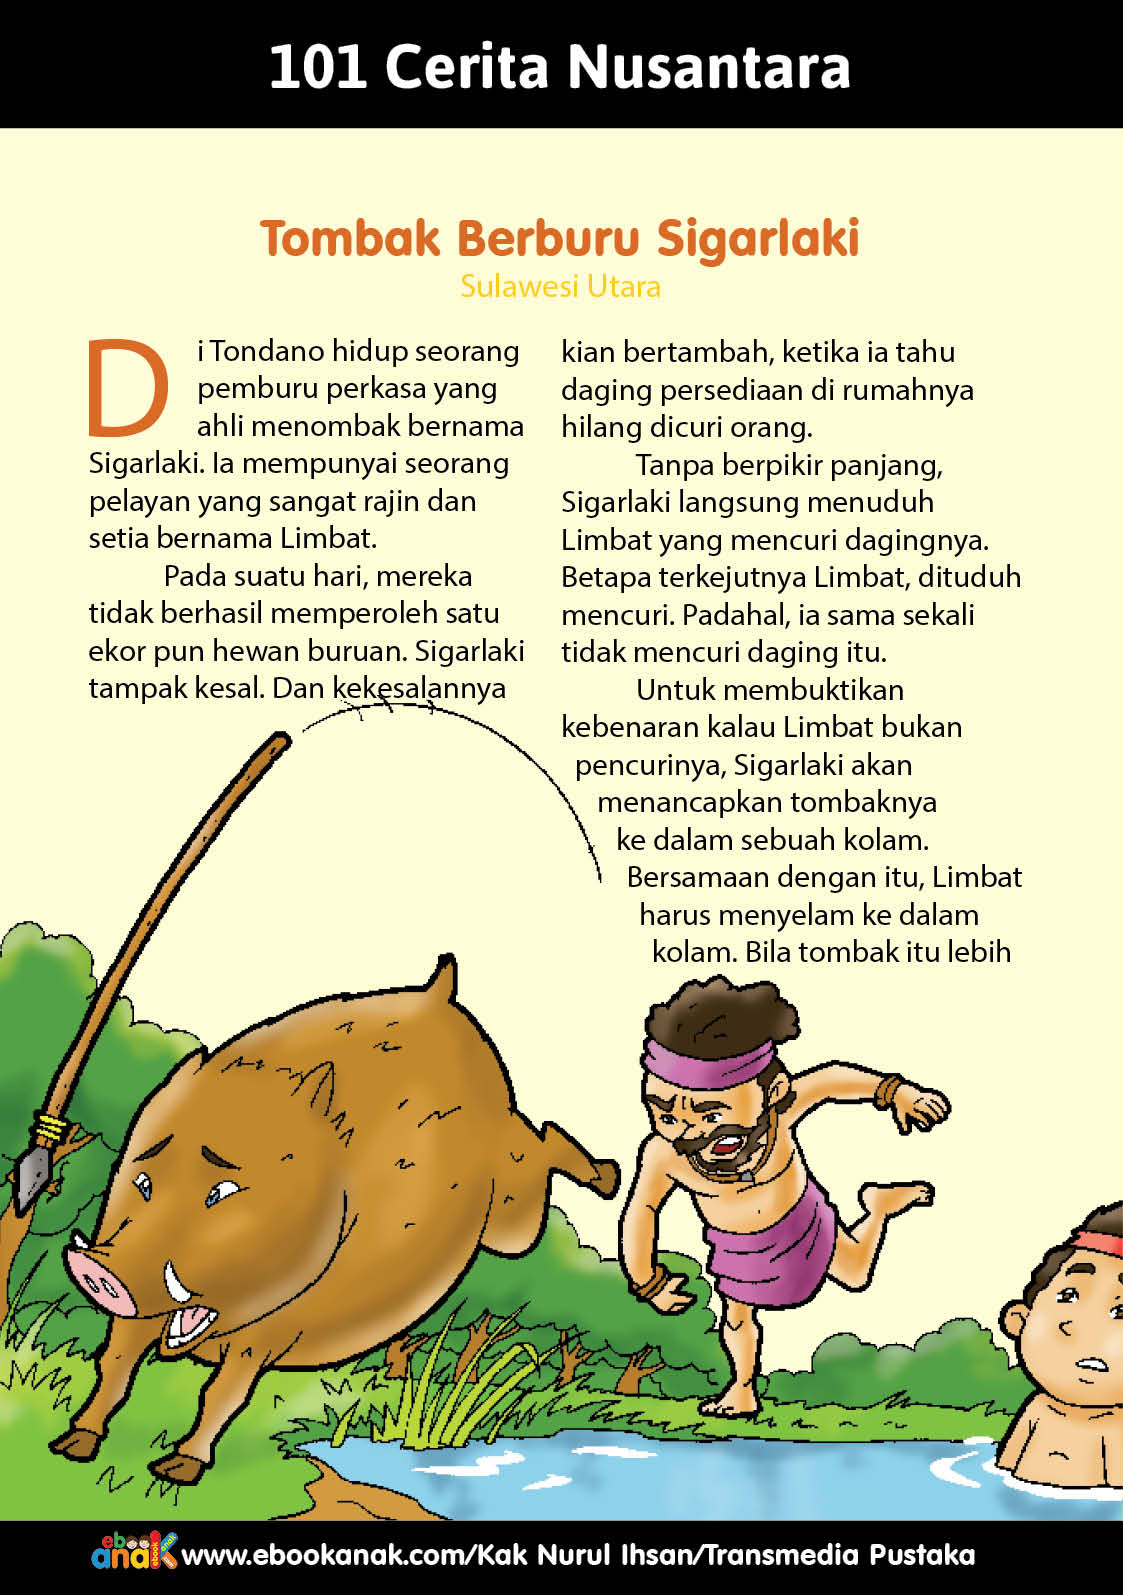 Tombak Berburu Sigarlaki (Sulawesi Utara) 101 Cerita Nusantara77